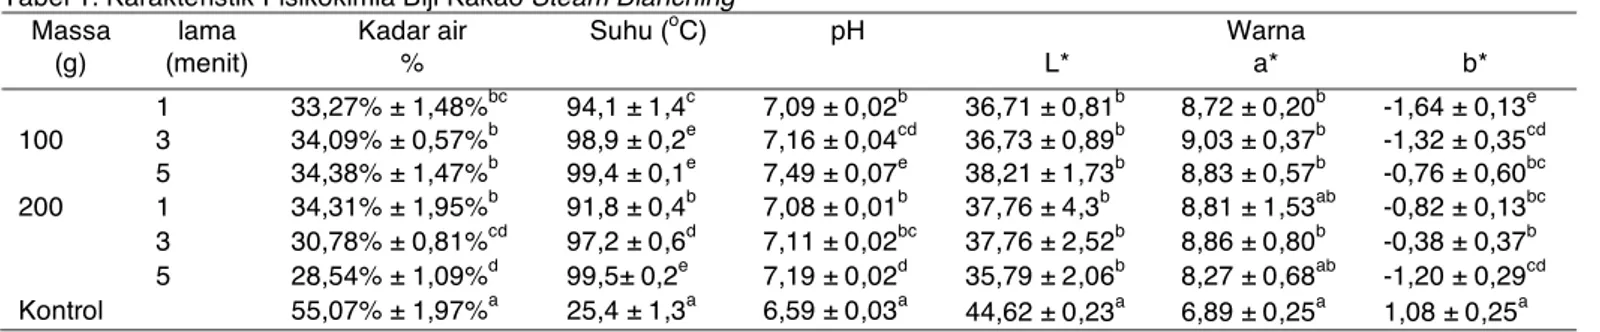 Tabel 1. Karakteristik Fisikokimia Biji Kakao Steam Blanching  Massa  (g)  lama  (menit)  Kadar air %  Suhu ( o C)  pH  Warna L*  a*  b*  1  33,27% ± 1,48% bc 94,1 ± 1,4 c 7,09 ± 0,02 b 36,71 ± 0,81 b 8,72 ± 0,20 b -1,64 ± 0,13 e 100  3  34,09% ± 0,57% b 9